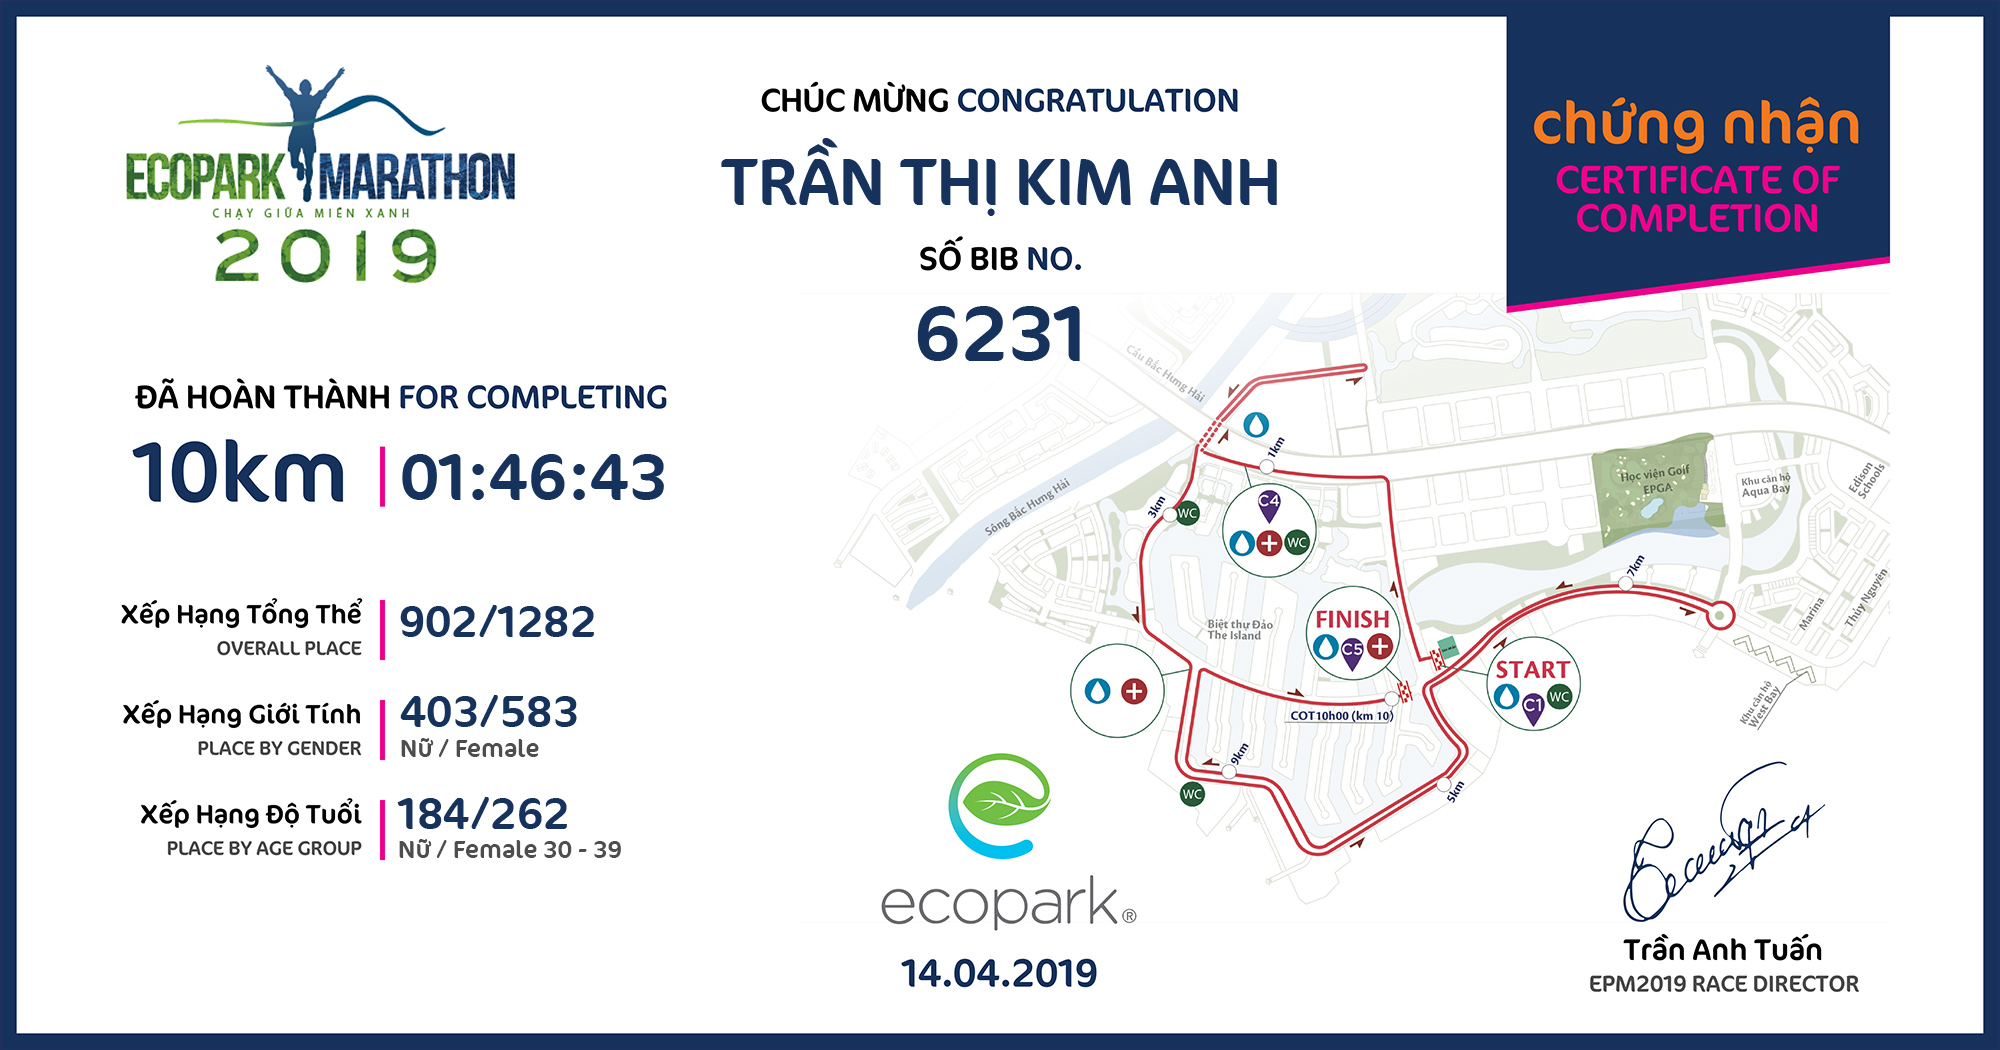 6231 - Trần Thị Kim Anh